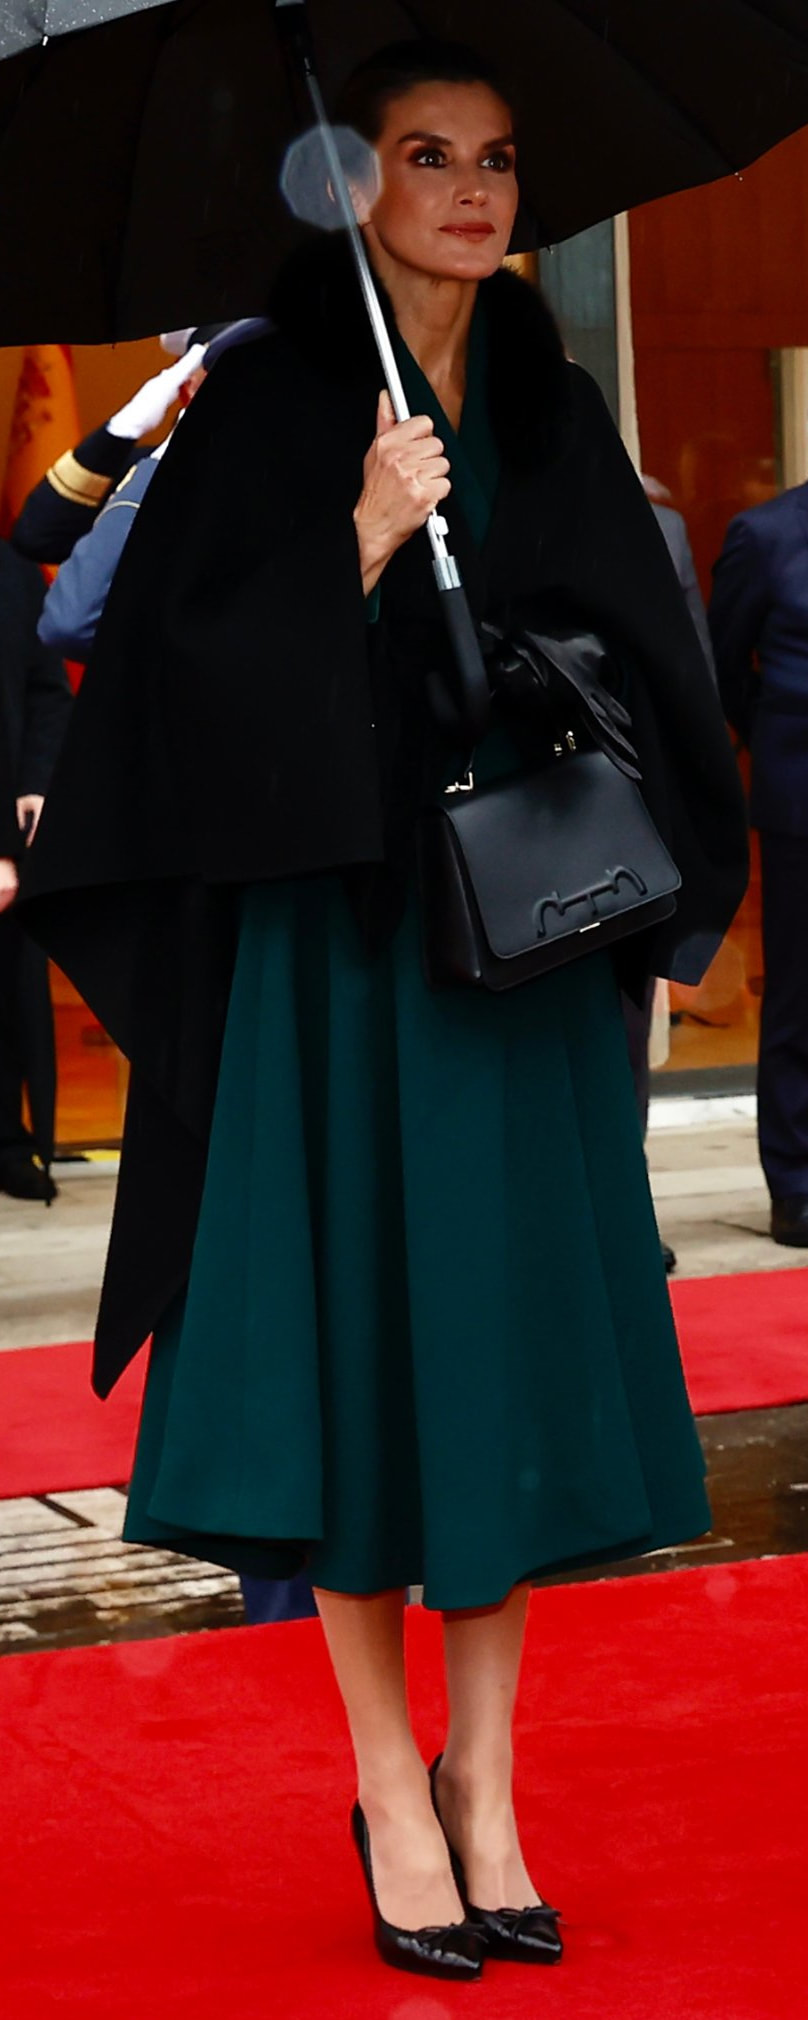 Carolina Herrera Victoria Insignia Satchel Bag in Black​ as carried by Queen Letizia.